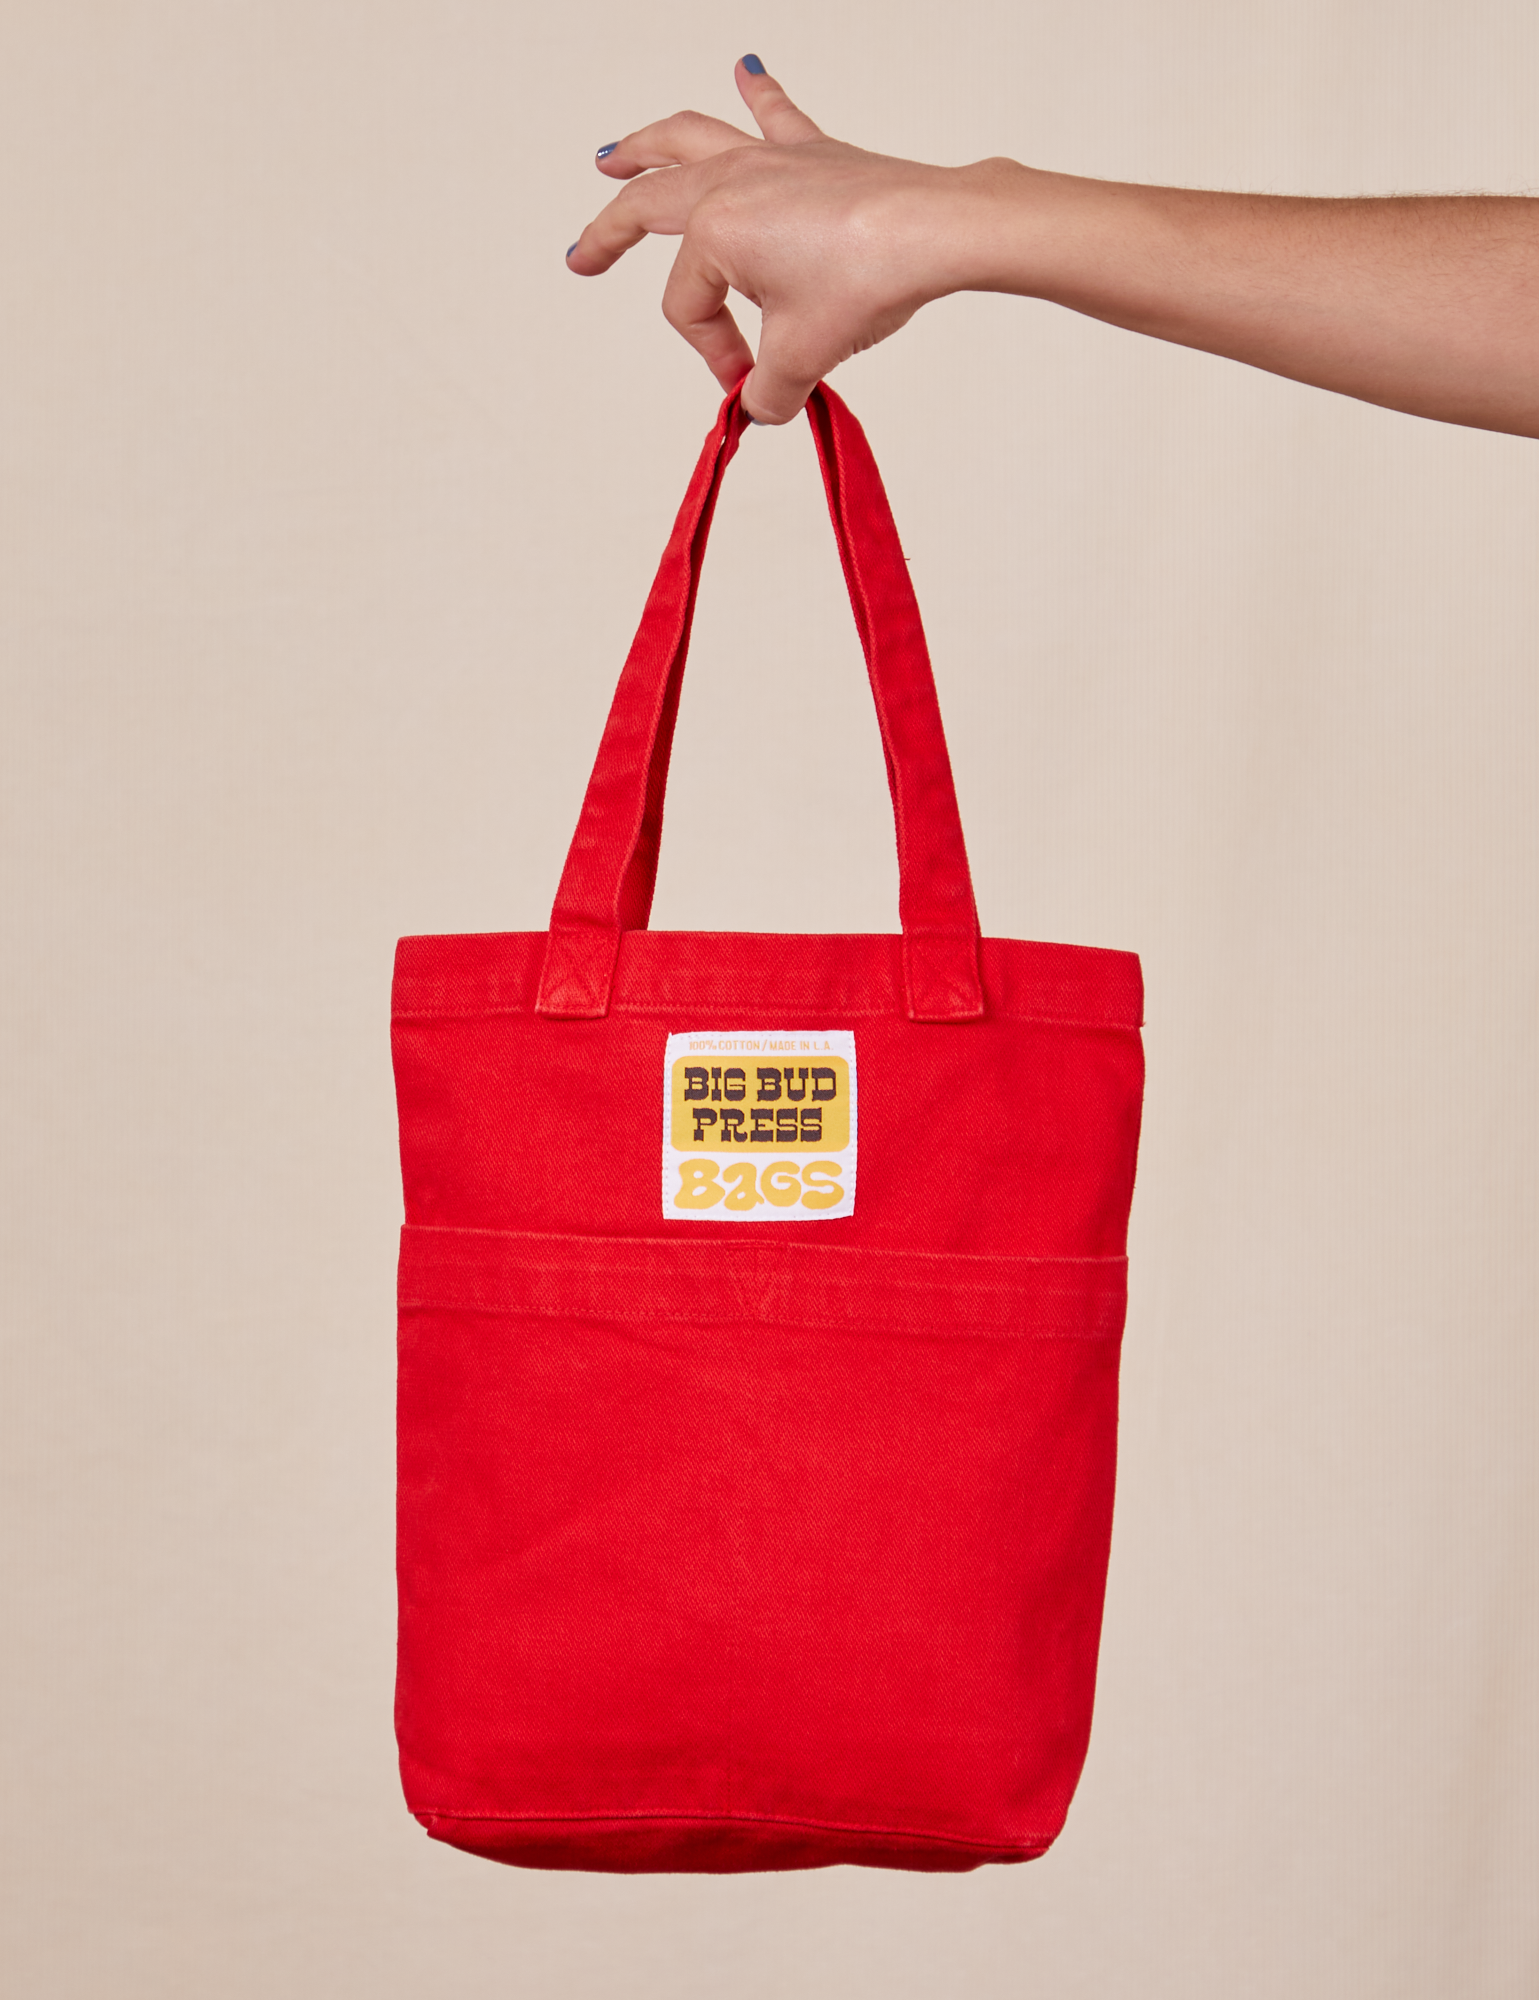 Mini Tote Bags – BIG BUD PRESS